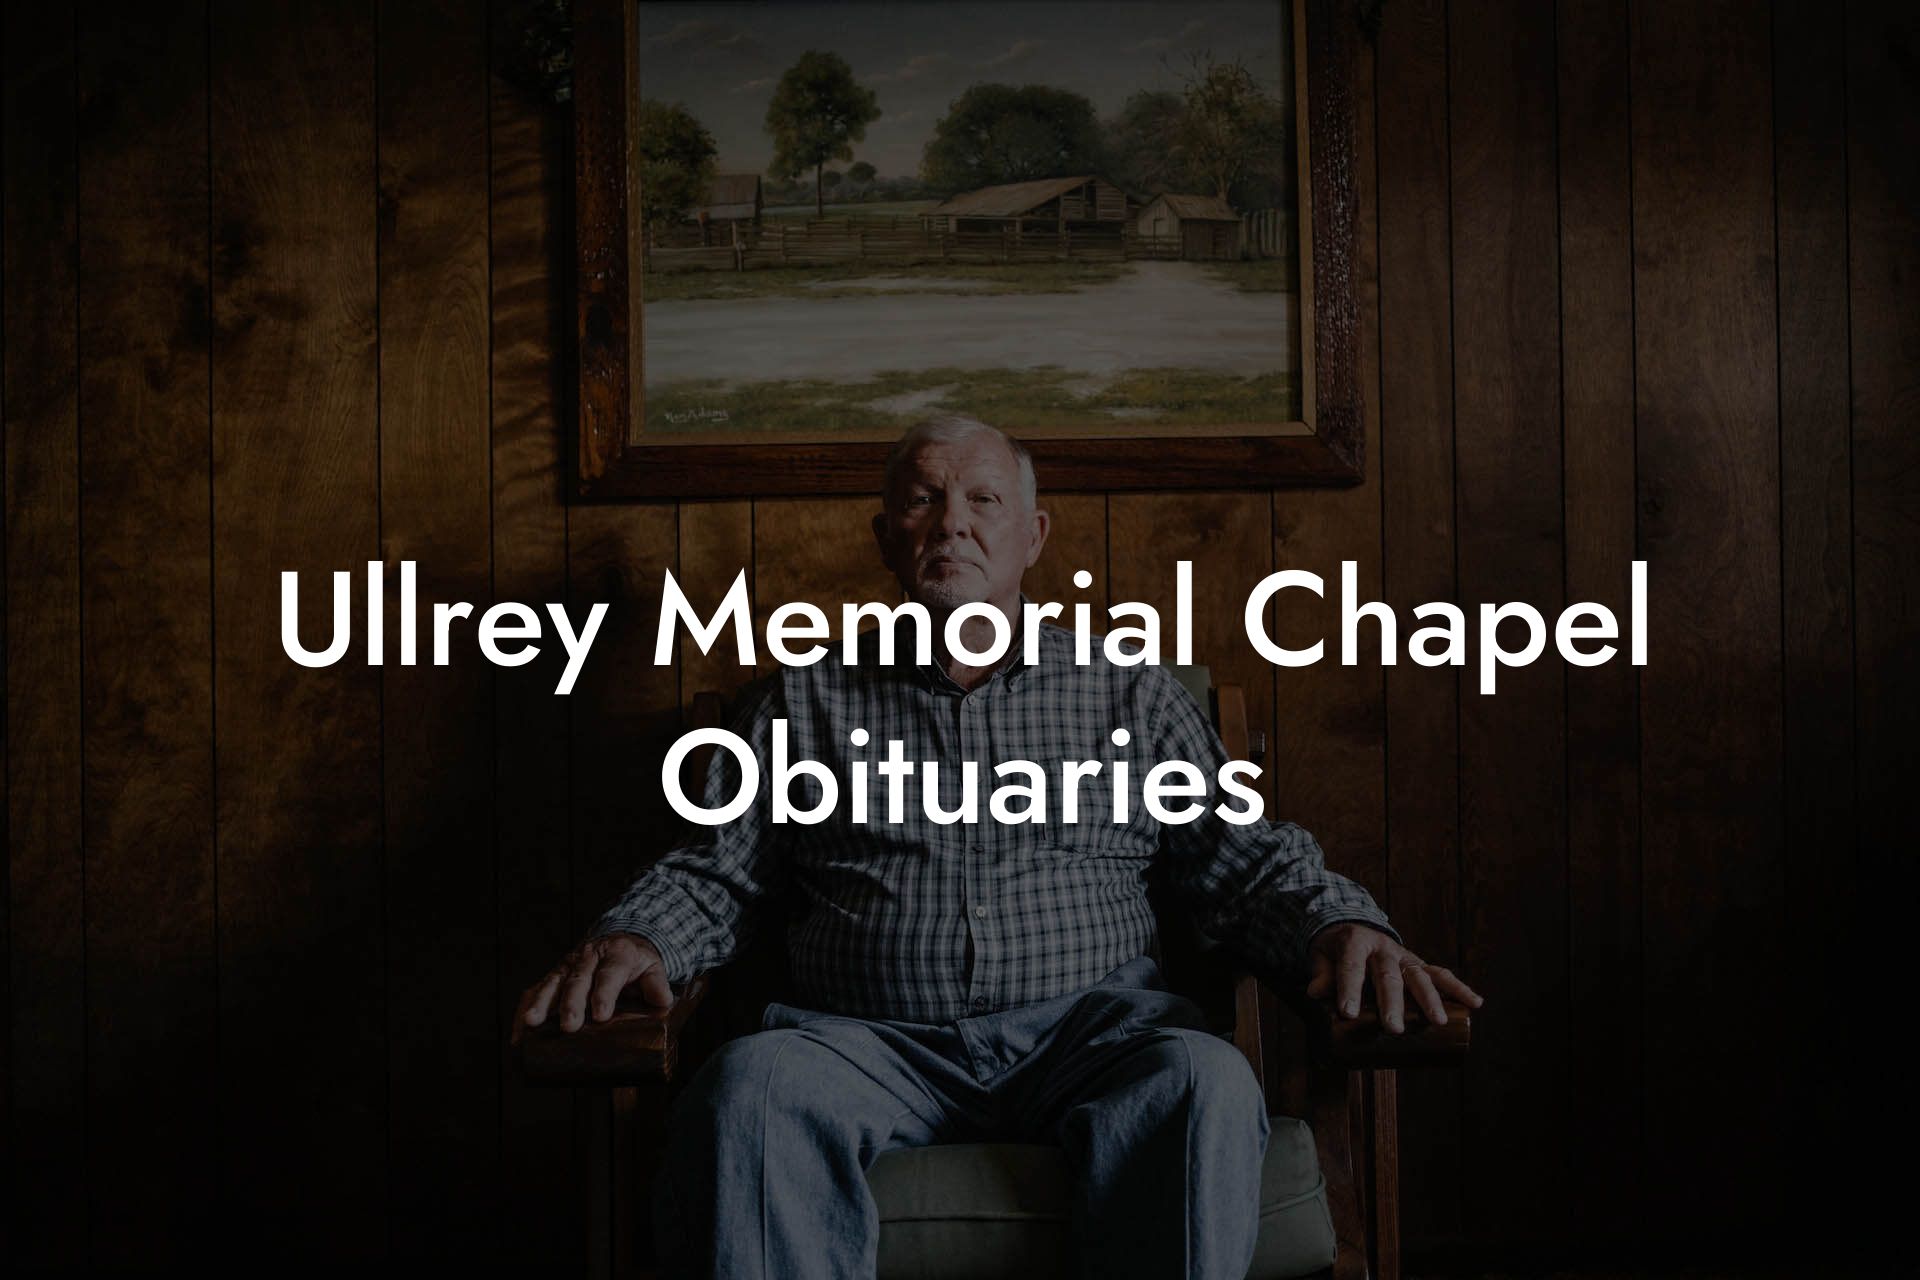 Ullrey Memorial Chapel Obituaries